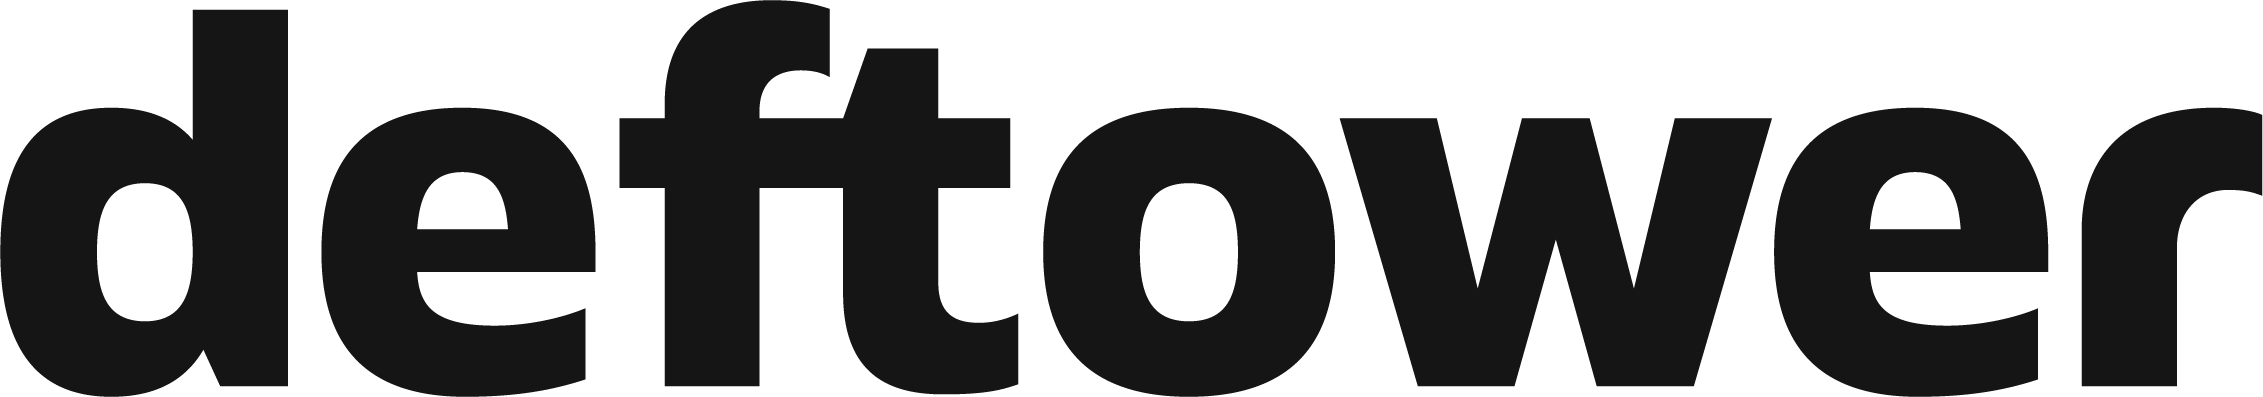 Logotipo da DEFTOWER